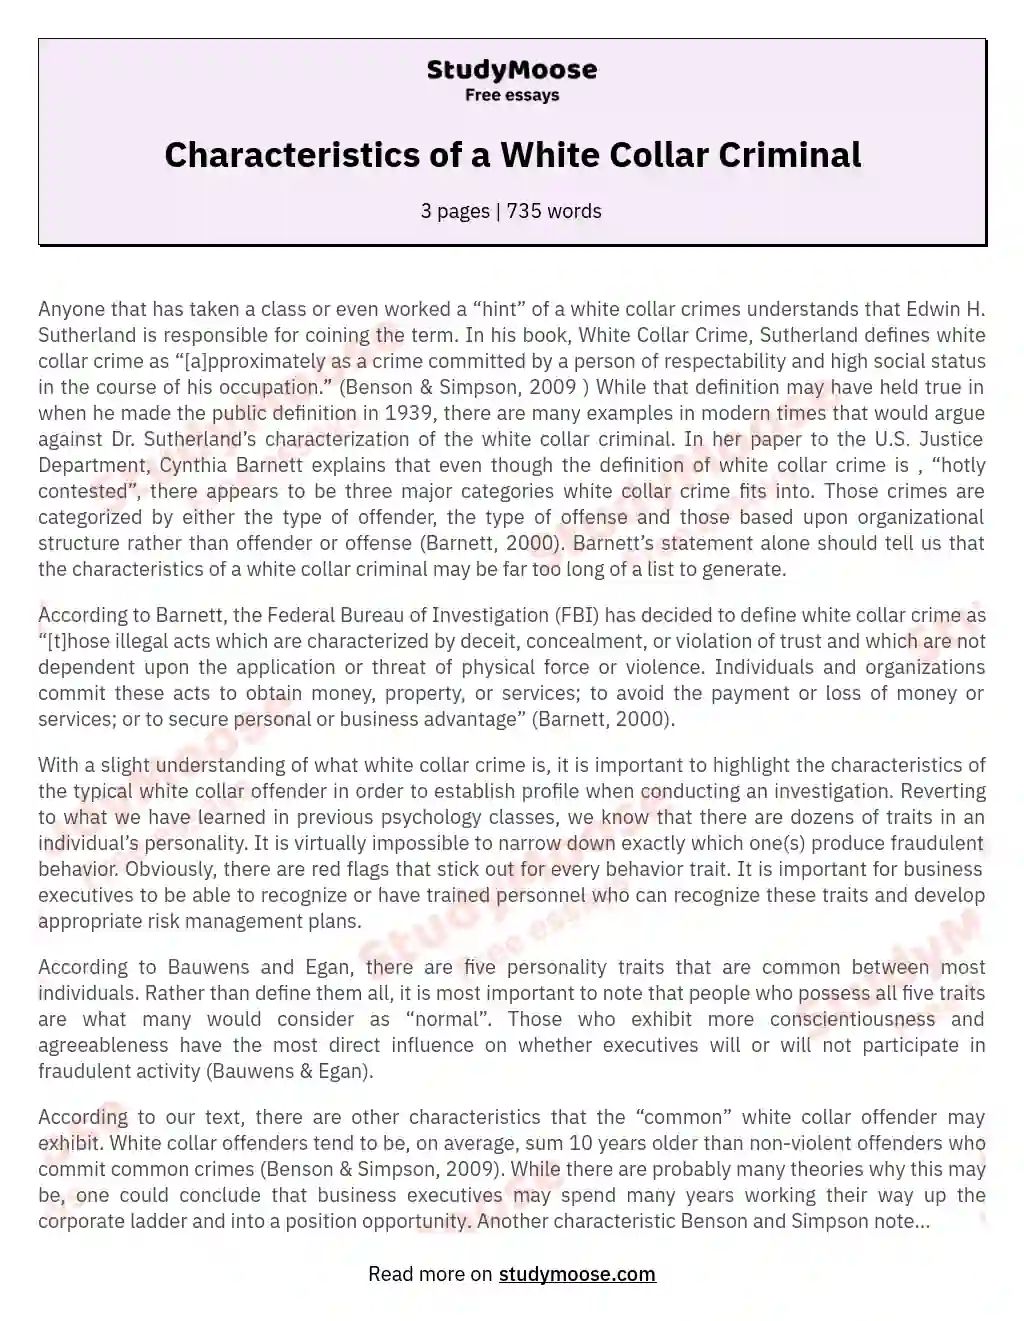 Characteristics of a White Collar Criminal